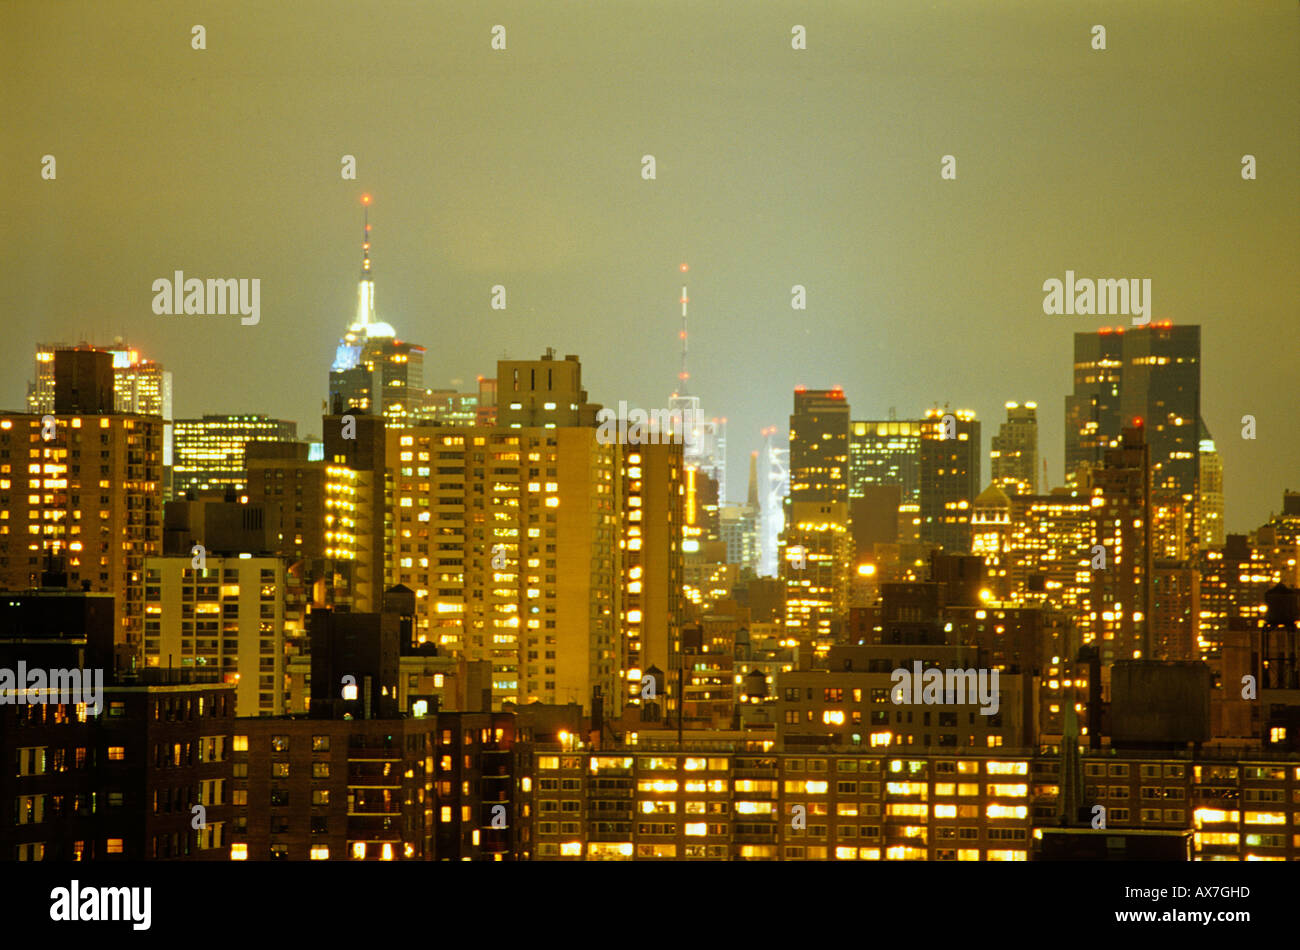 Illuminated high rise buildings at night, Manhattan, New York, USA, America Stock Photo